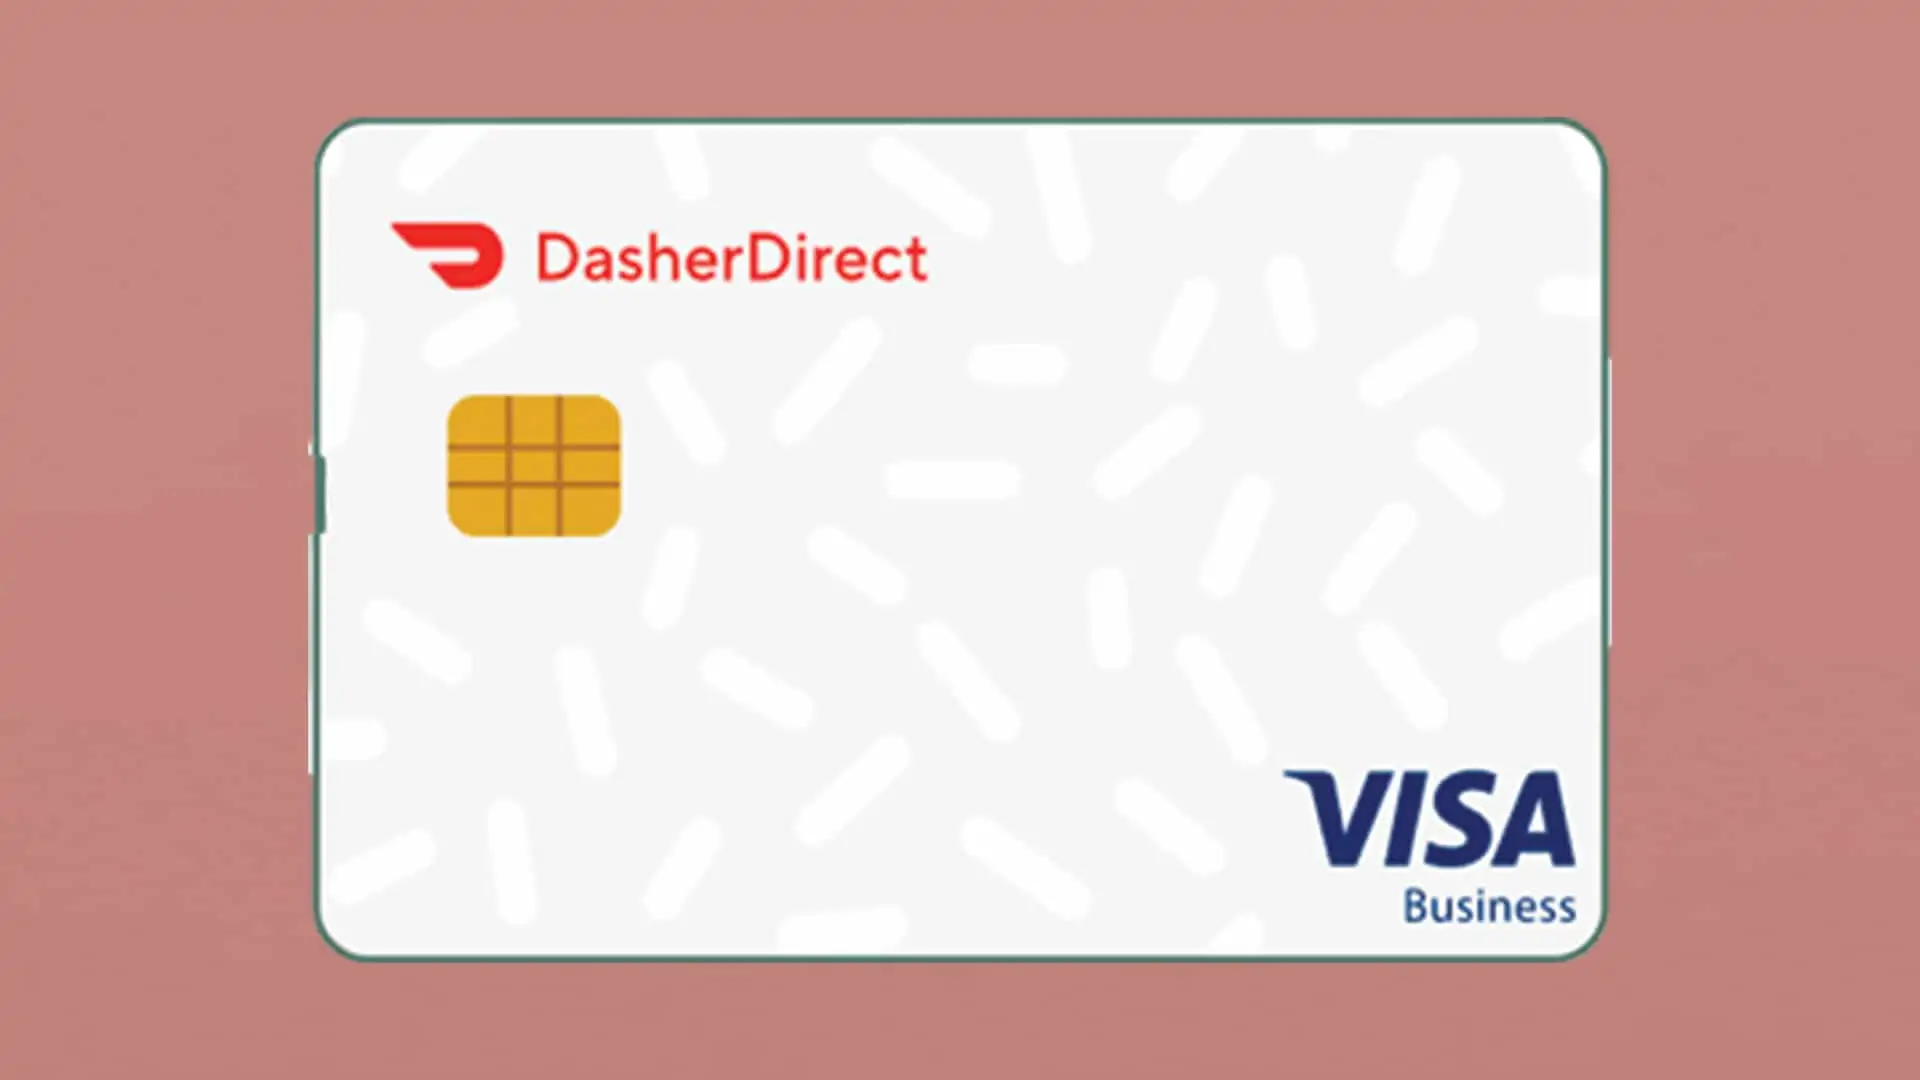 Dasherdirect card